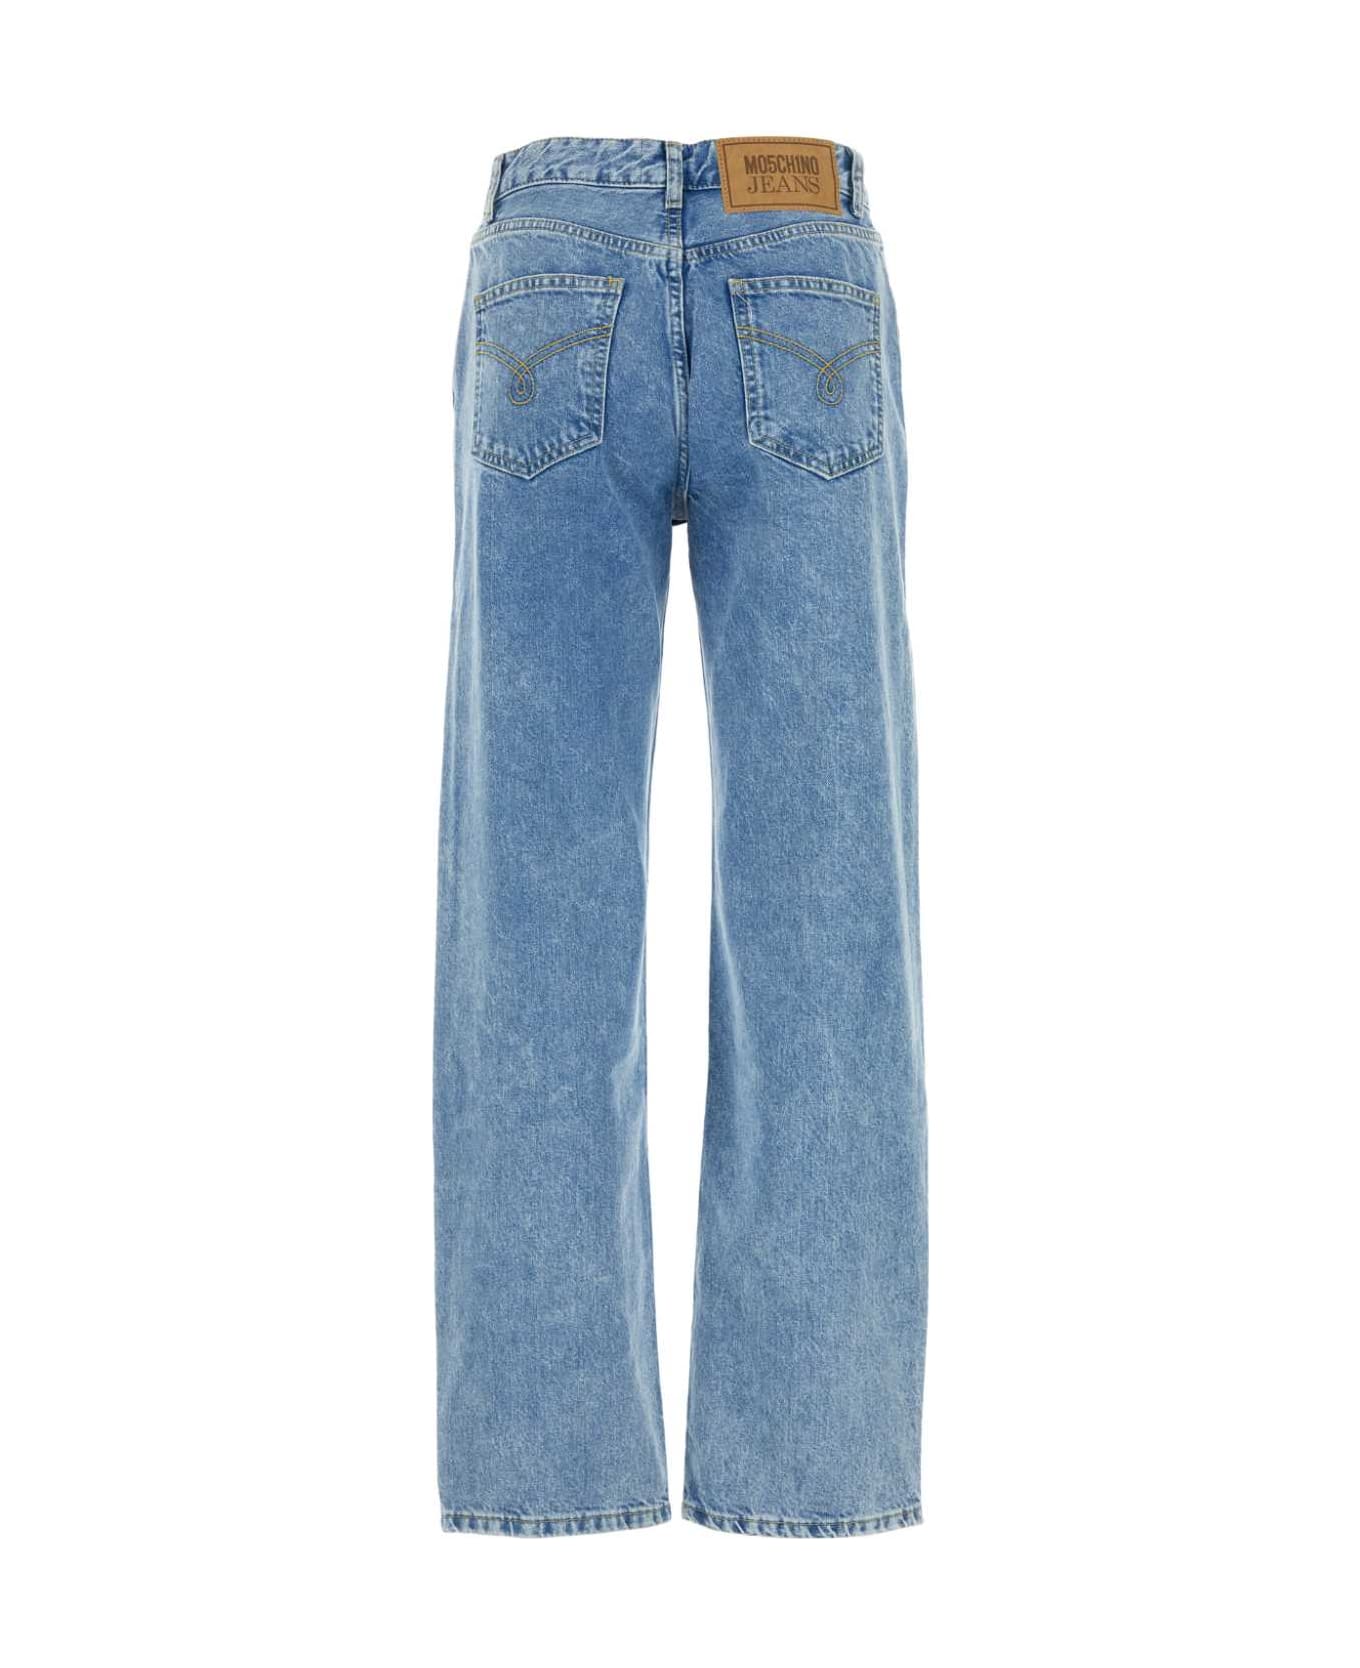 Moschino Denim Jeans - 1295